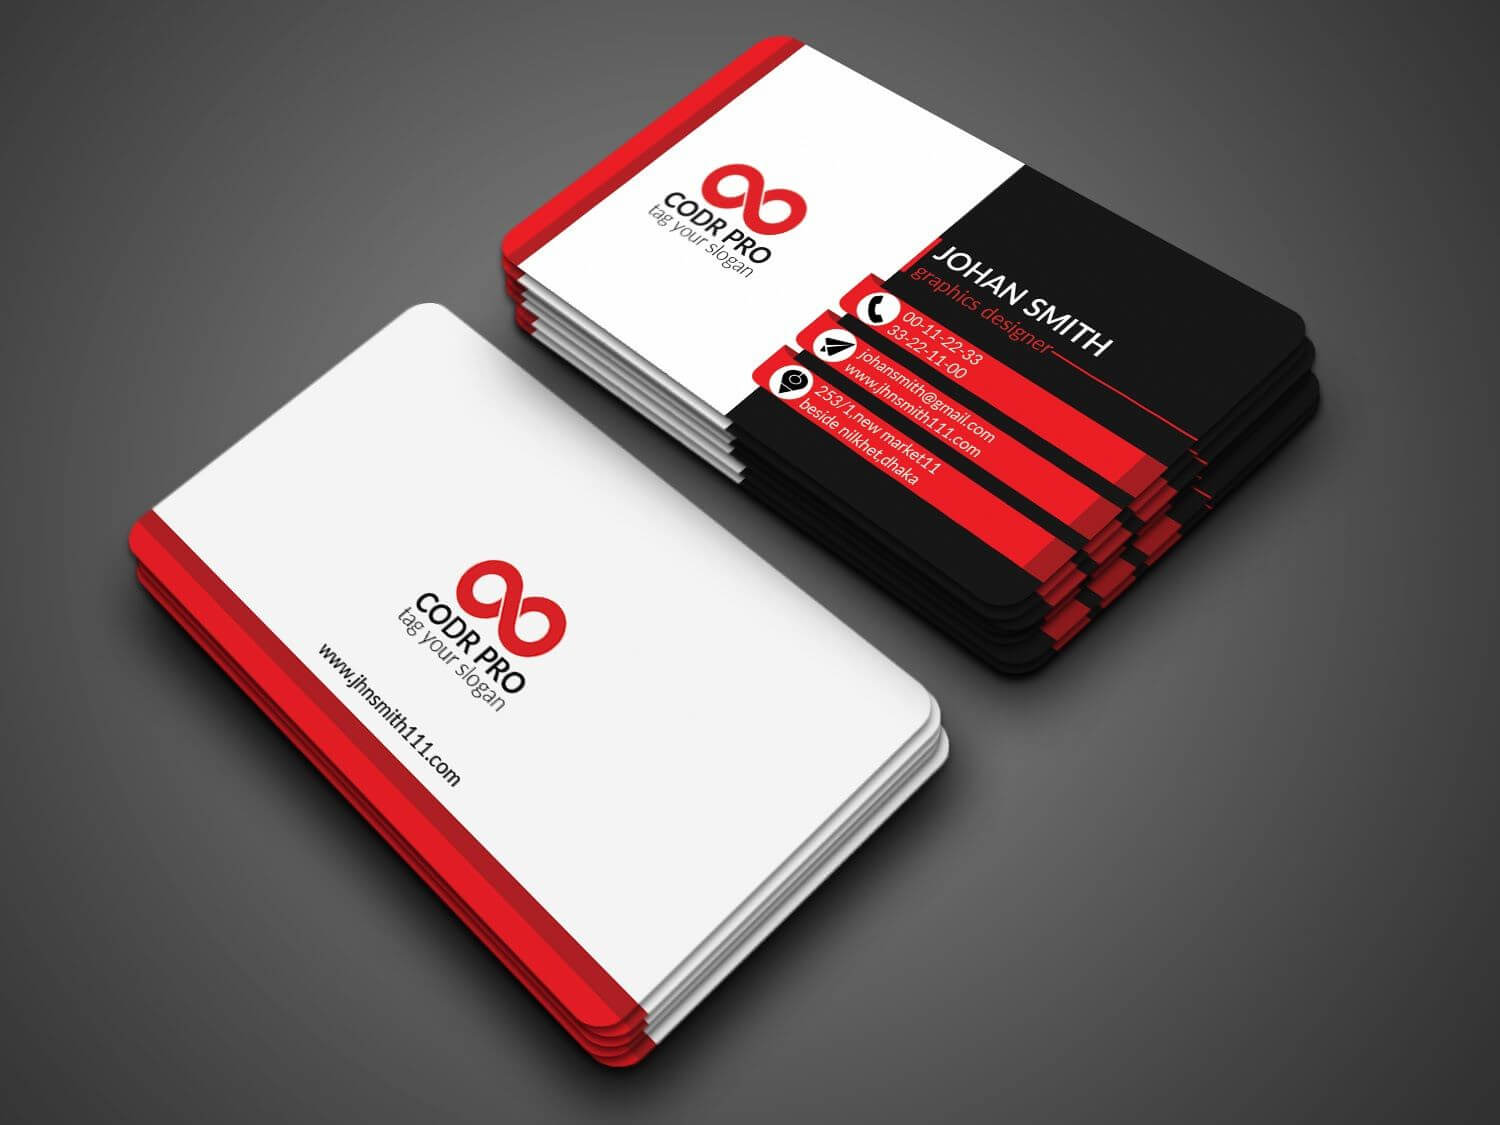 Professional Business Card Design In Photoshop Cs6 Tutorial Inside Business Card Template Photoshop Cs6